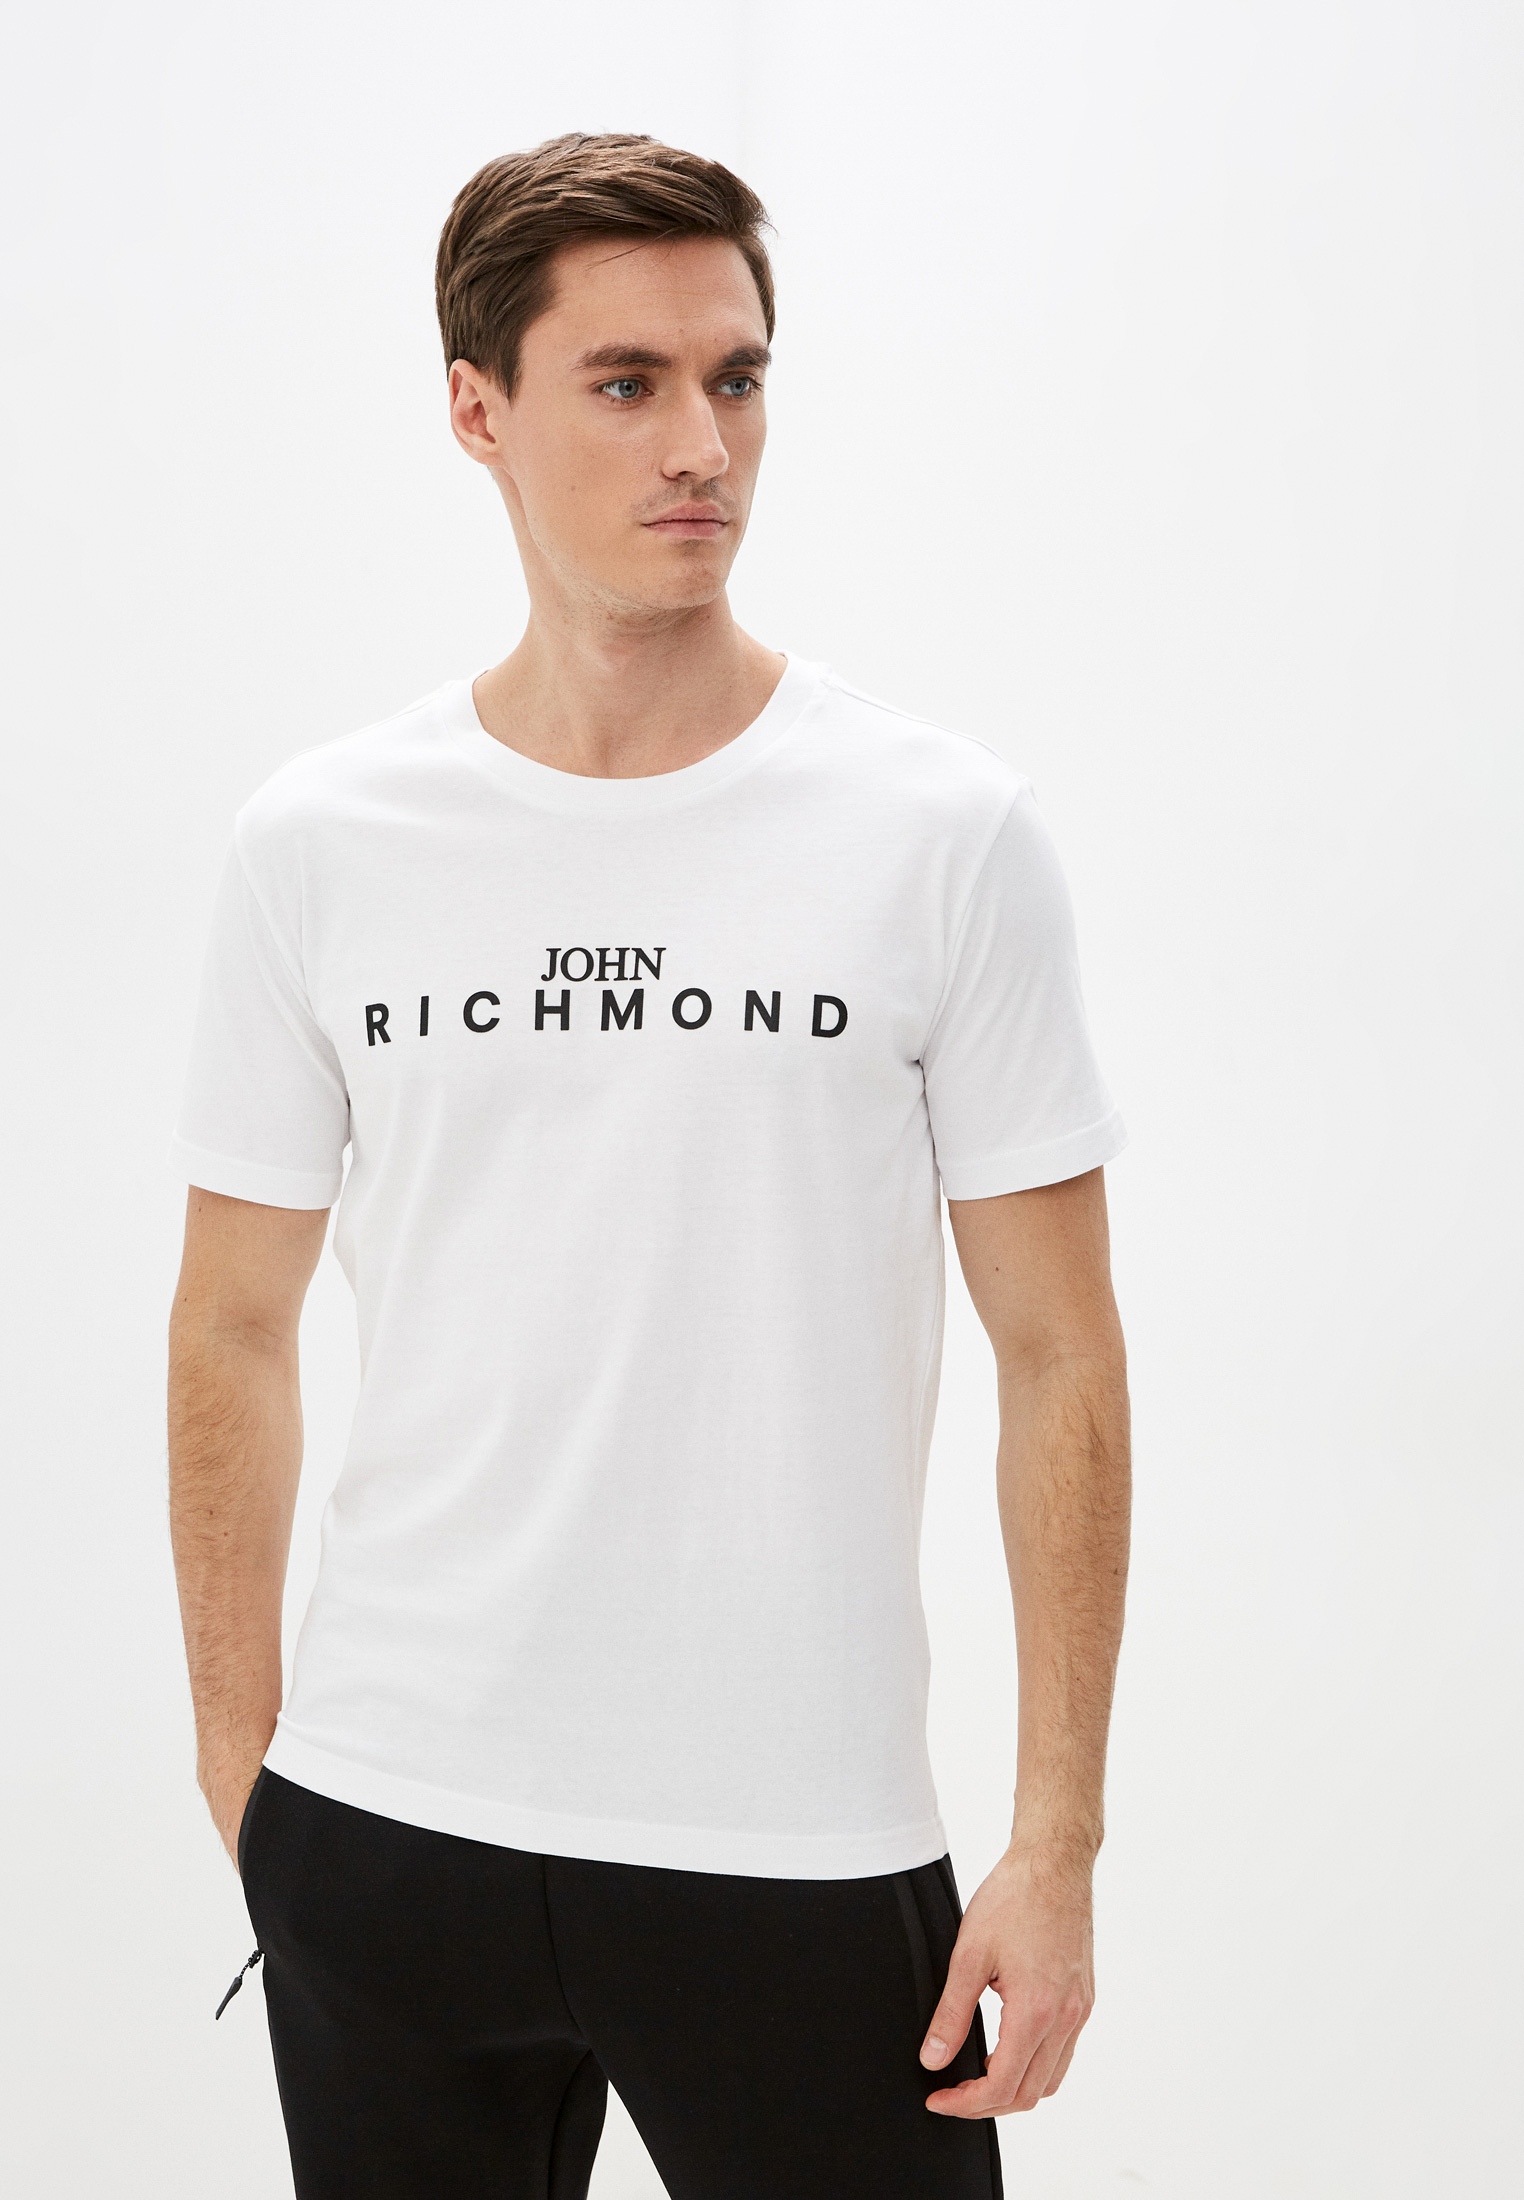 John richmond мужская. Футболка Джон Ричмонд белая. John Richmond одежда мужская футболка. John Richmond футболка мужская белая. Майка Джон Ричмонд мужская.